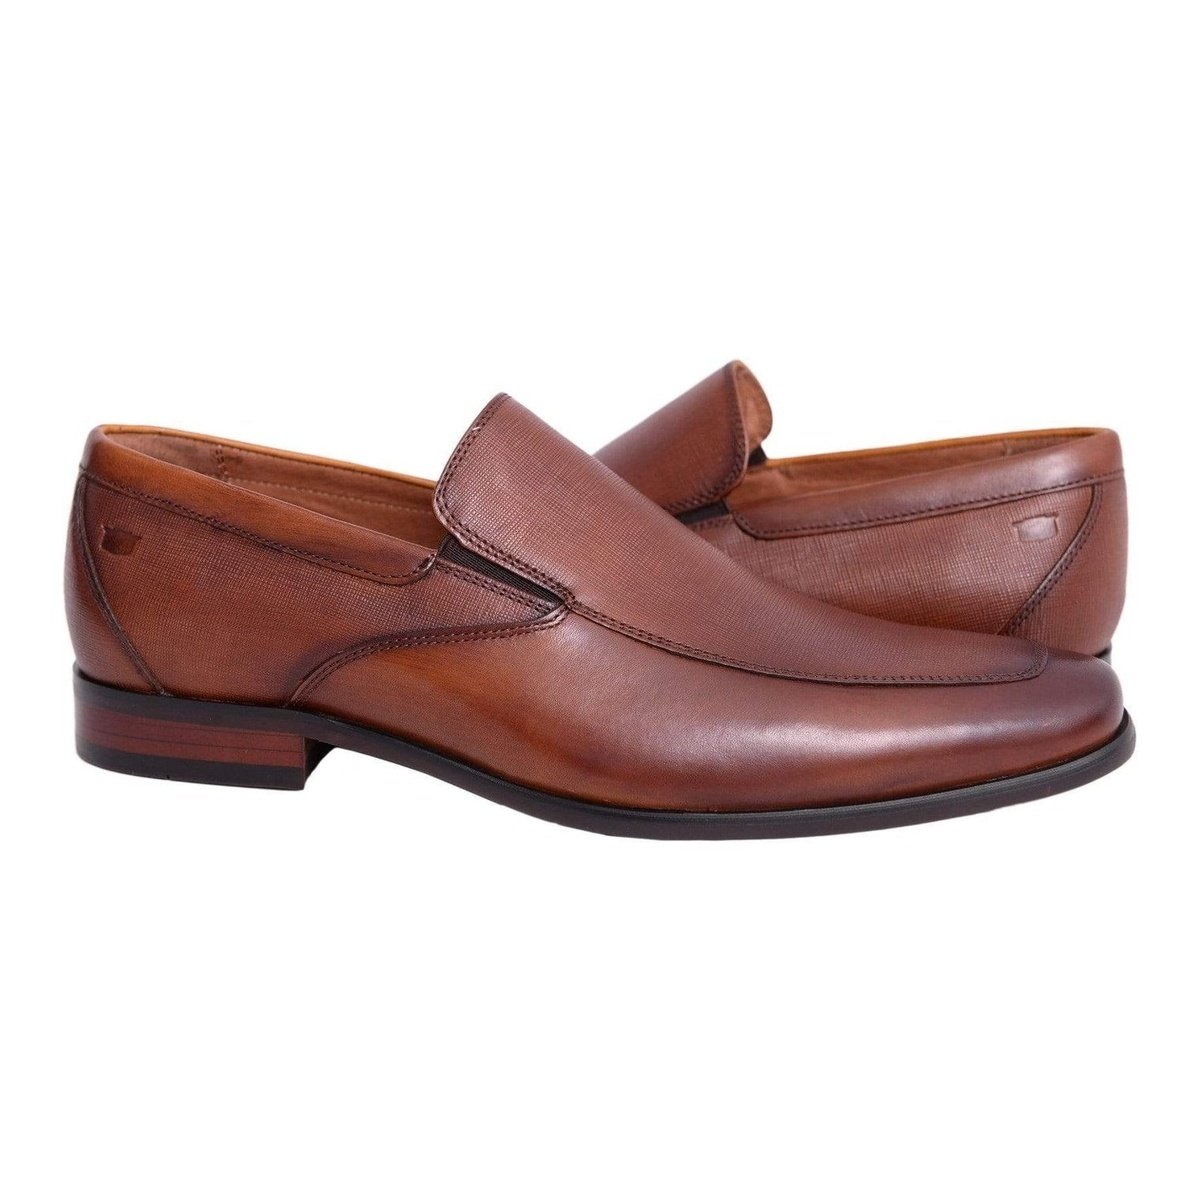 Florsheim SHOES 8.5 Florsheim Postino Cognac Brown Slip On Leather Dress Shoes